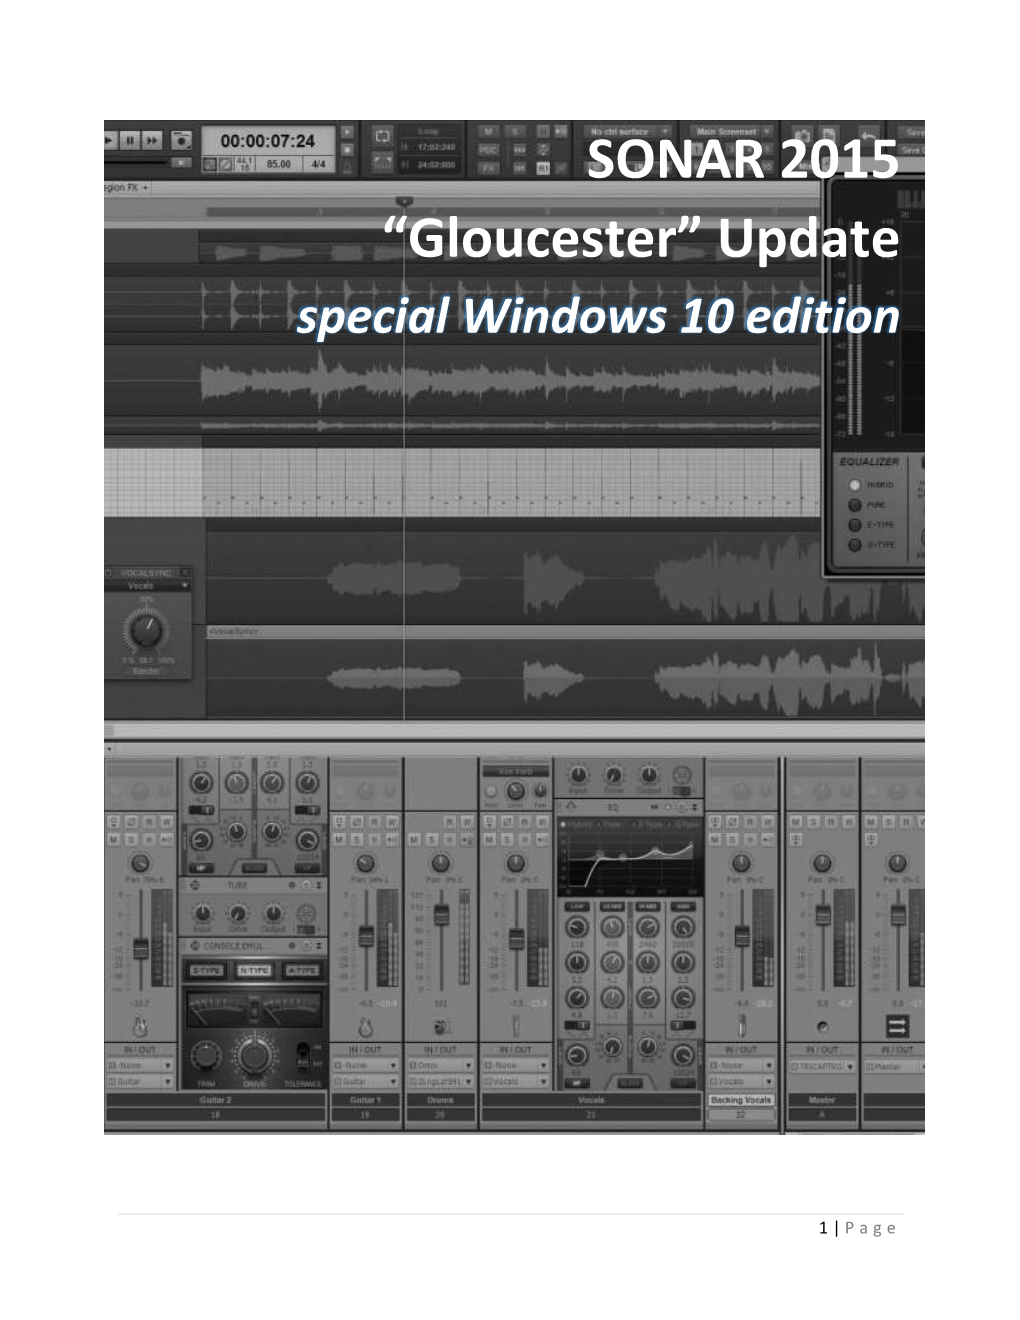 SONAR 2015 “Gloucester” Update Special Windows 10 Edition